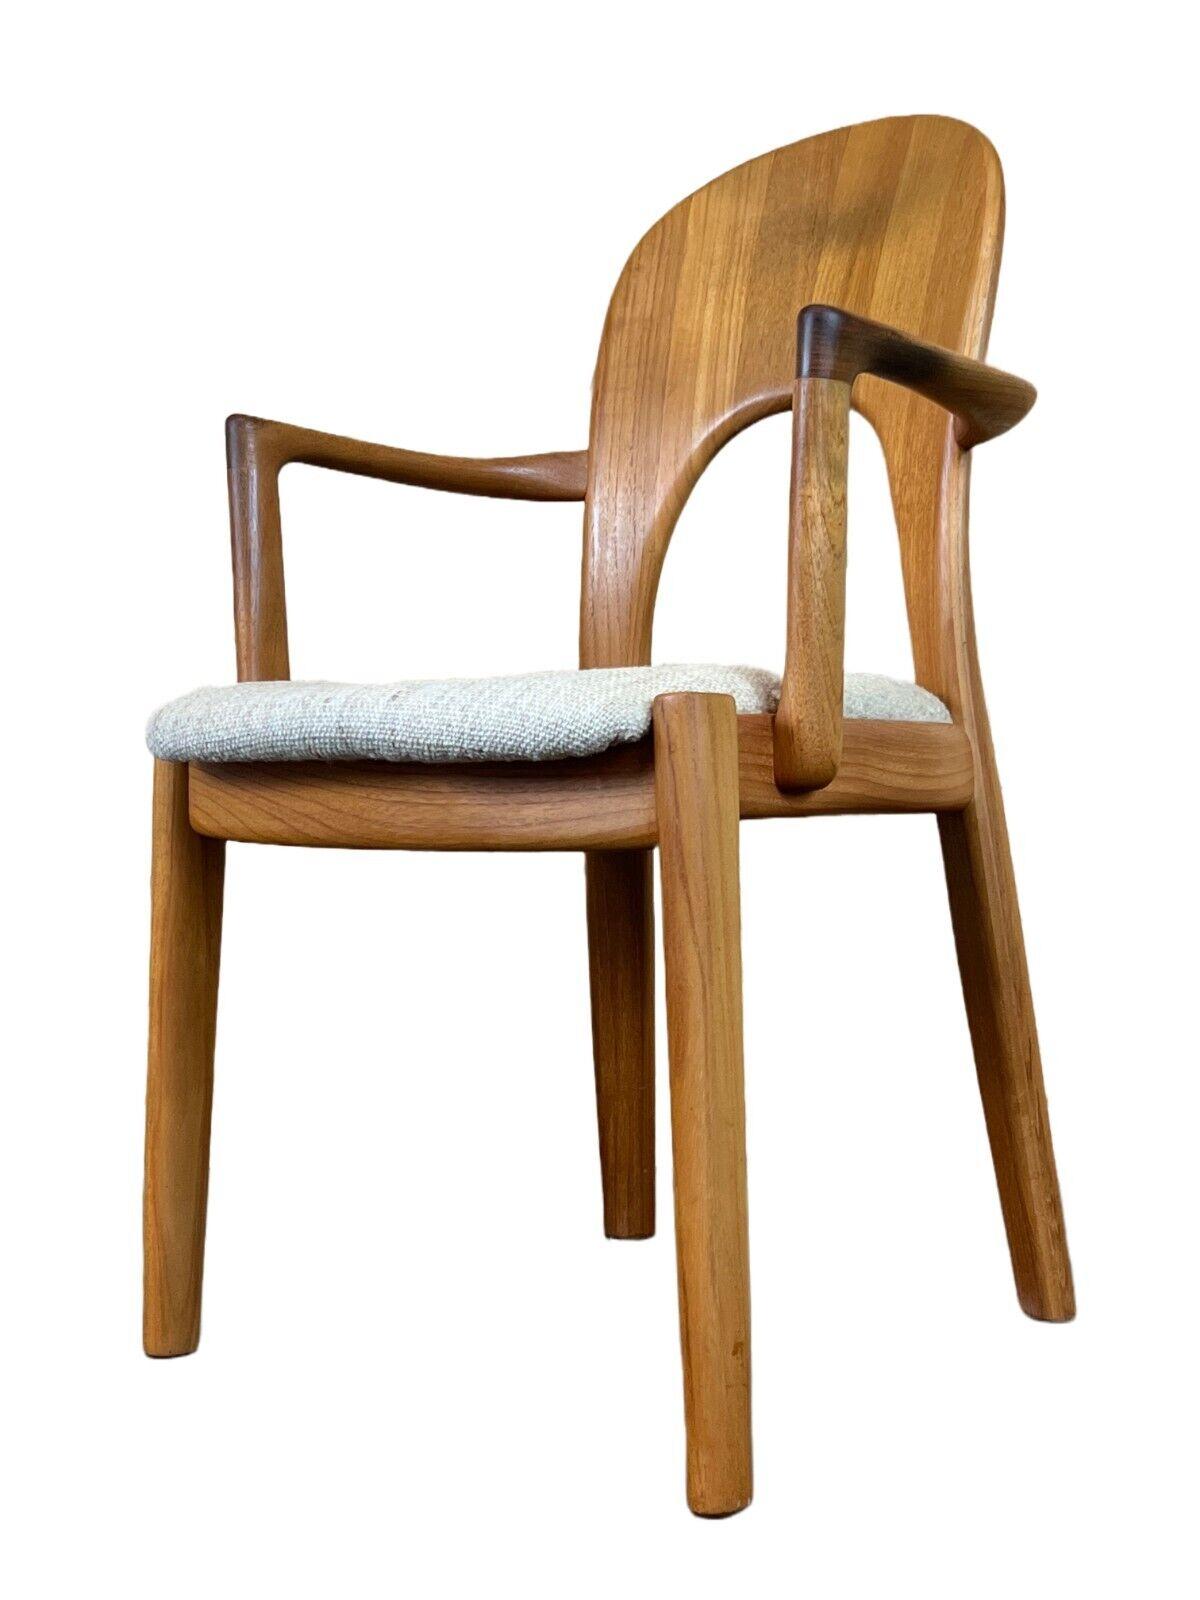 60s 70s Teak armchair desk chair Niels Koefoeds Hornslet

Object: armchair

Manufacturer: Koefoeds Hornslet

Condition: good

Age: around 1960-1970

Dimensions:

Width = 56cm
Depth = 57cm
Height = 88.5cm
Seat height = 45cm

Other